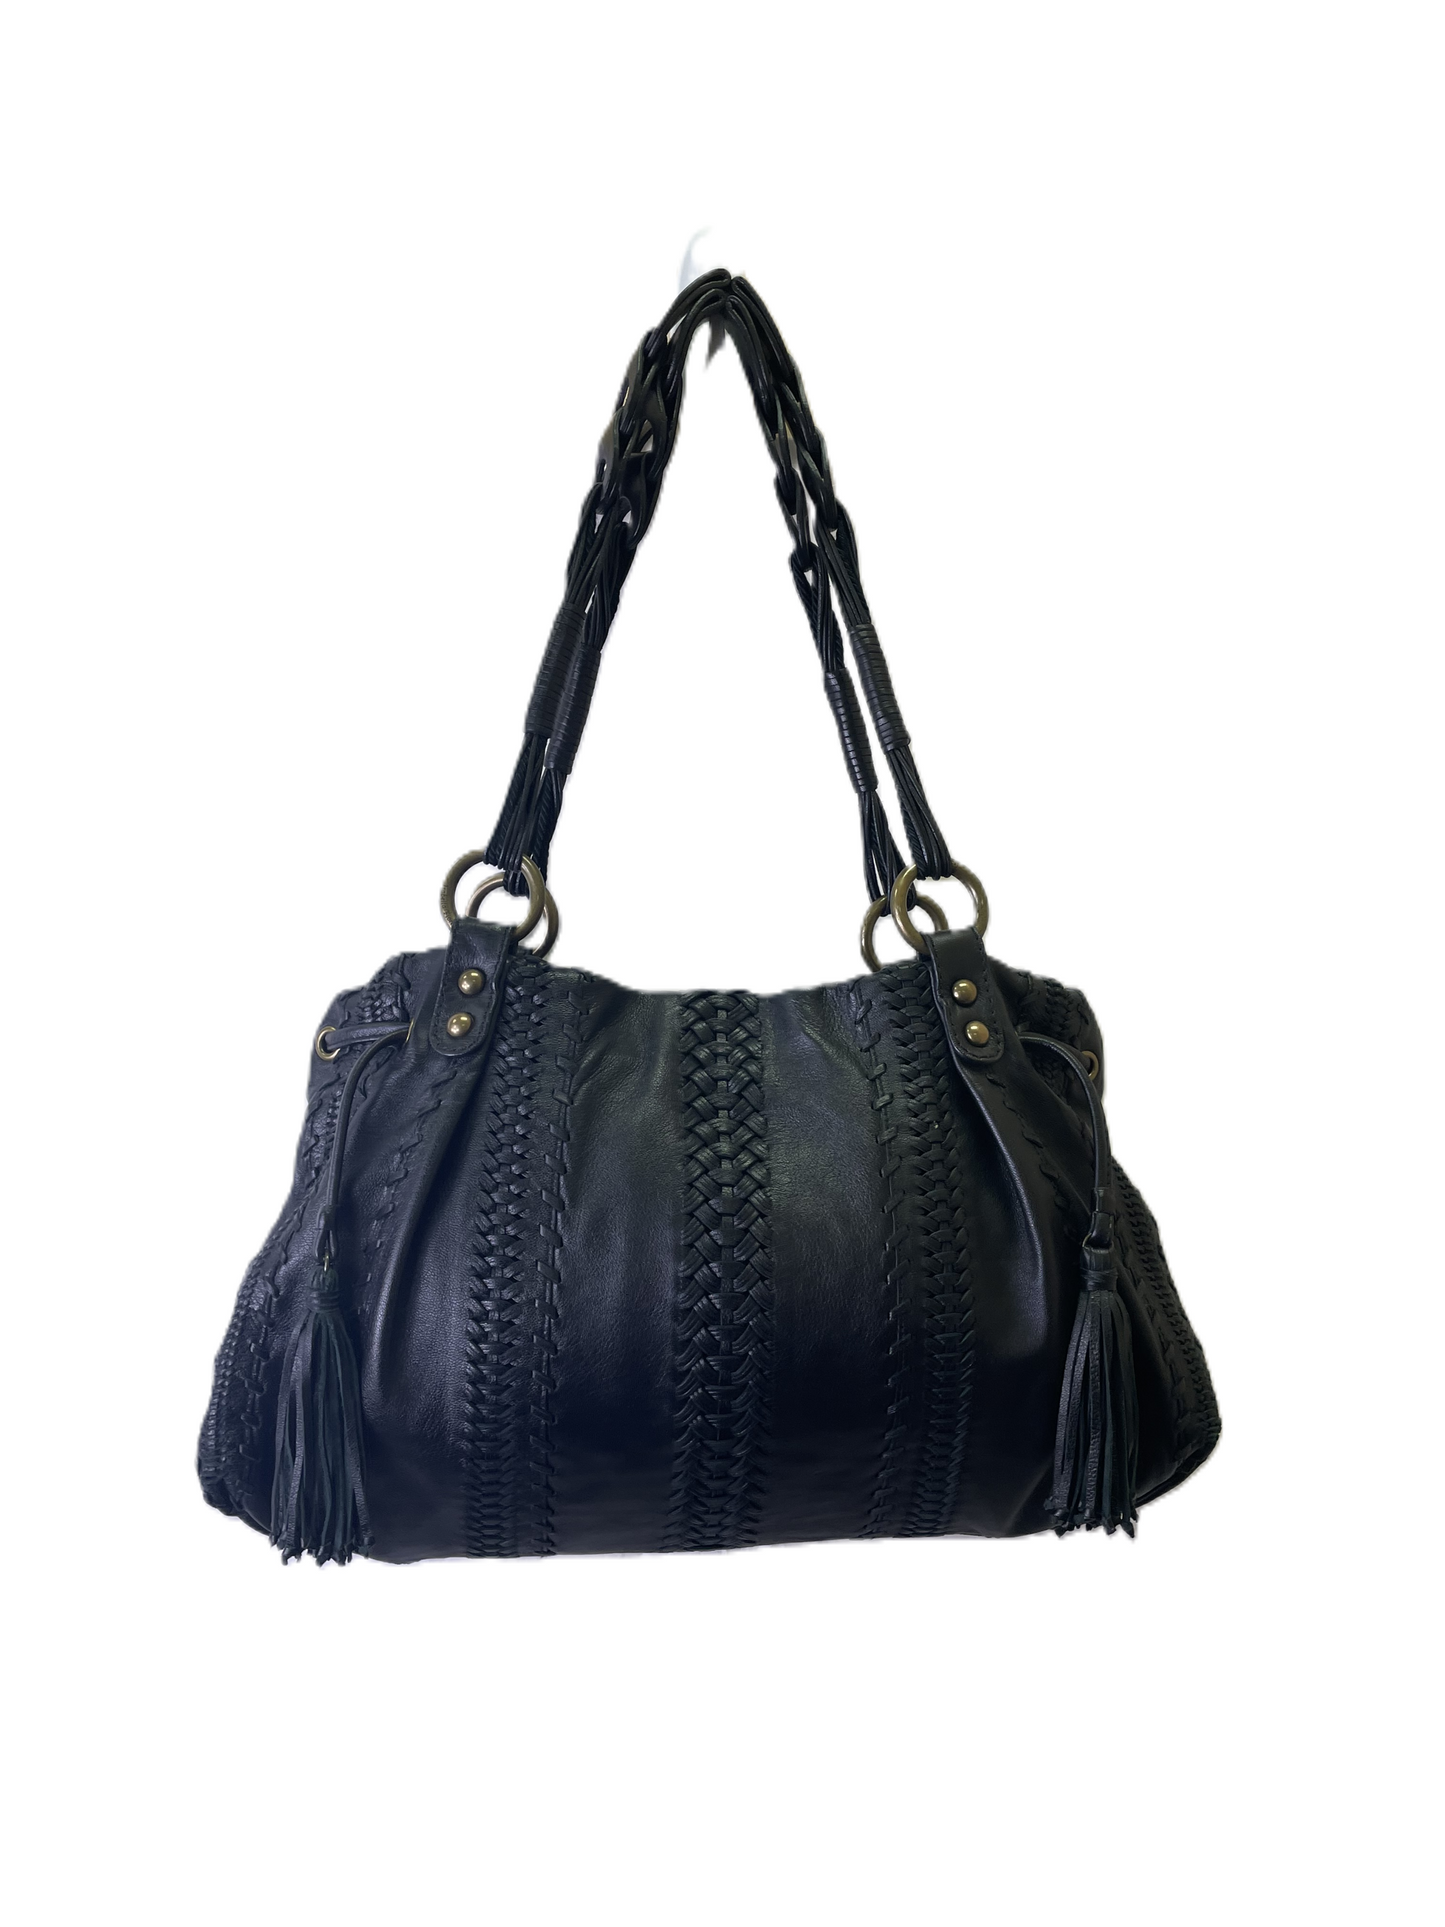 Handbag Designer By Isabella Fiore  Size: Large